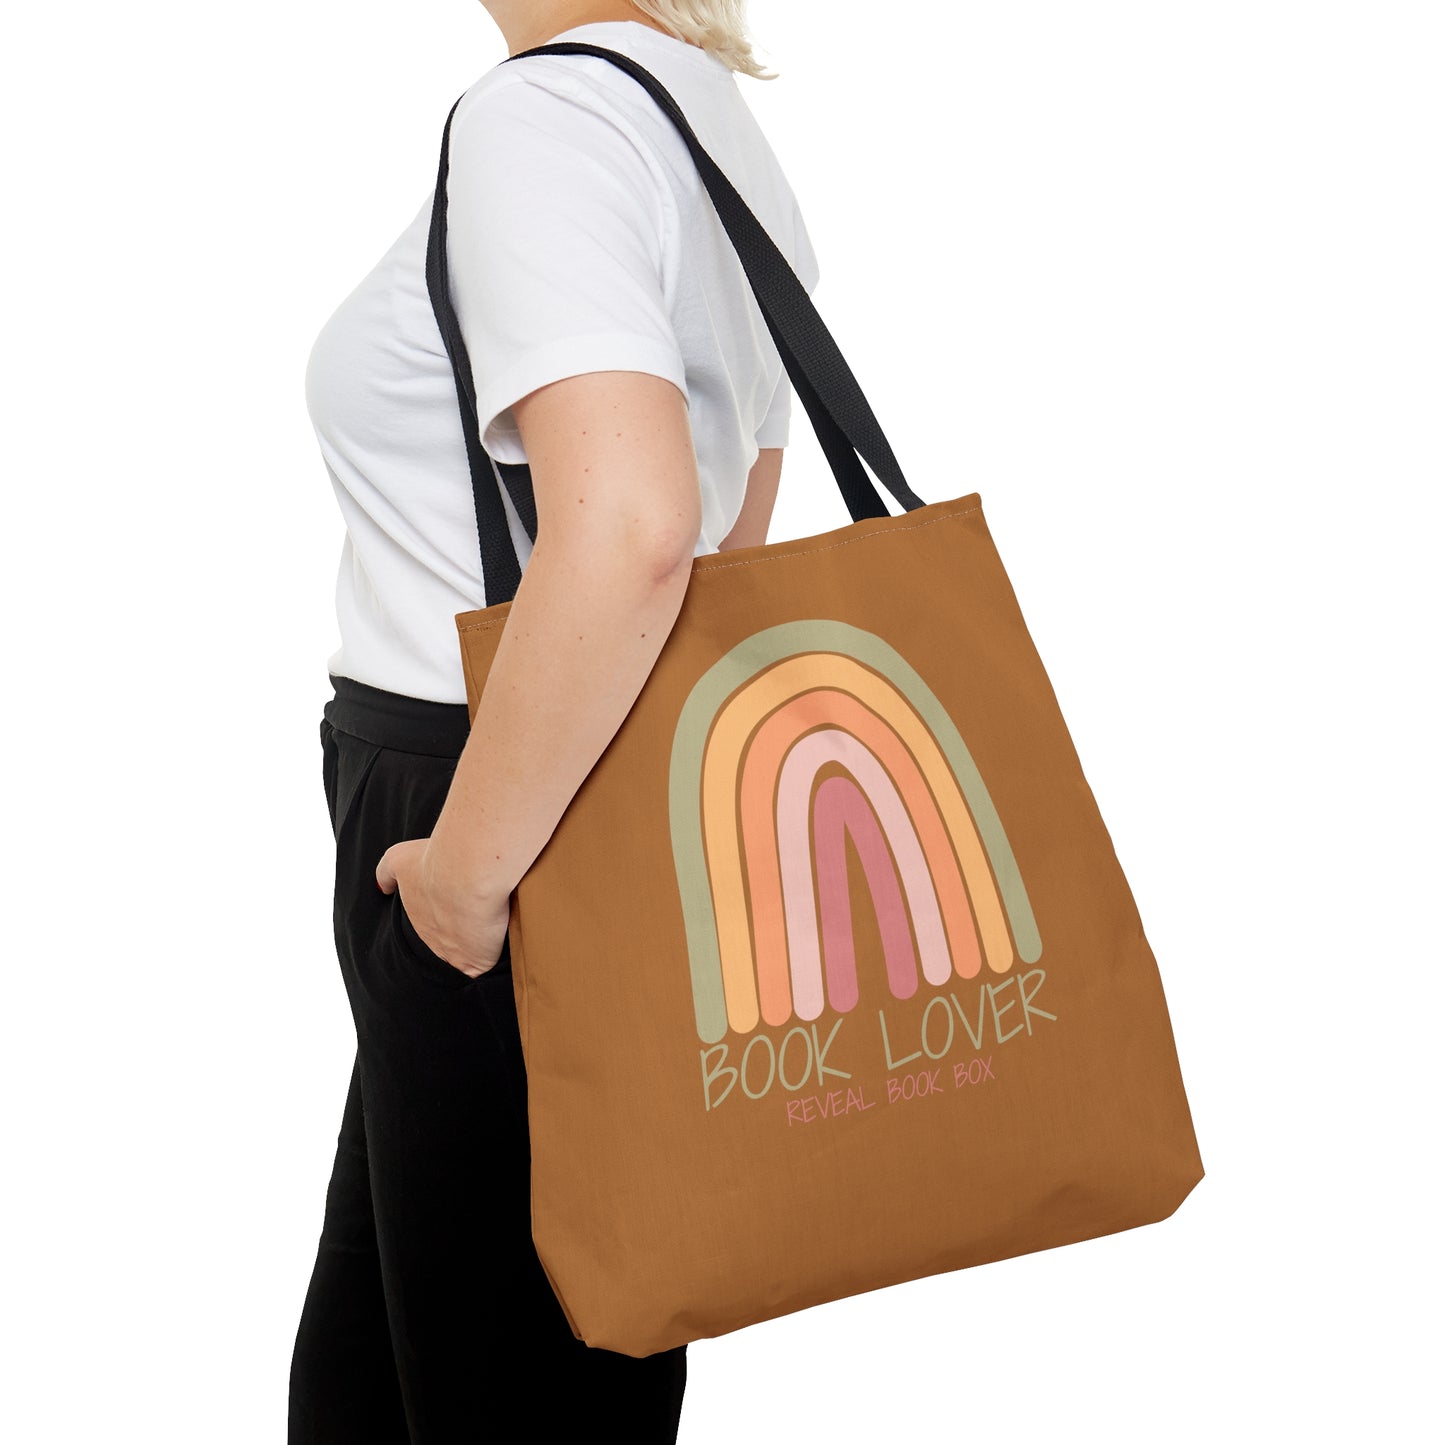 Boho Book Lover Tote Bag